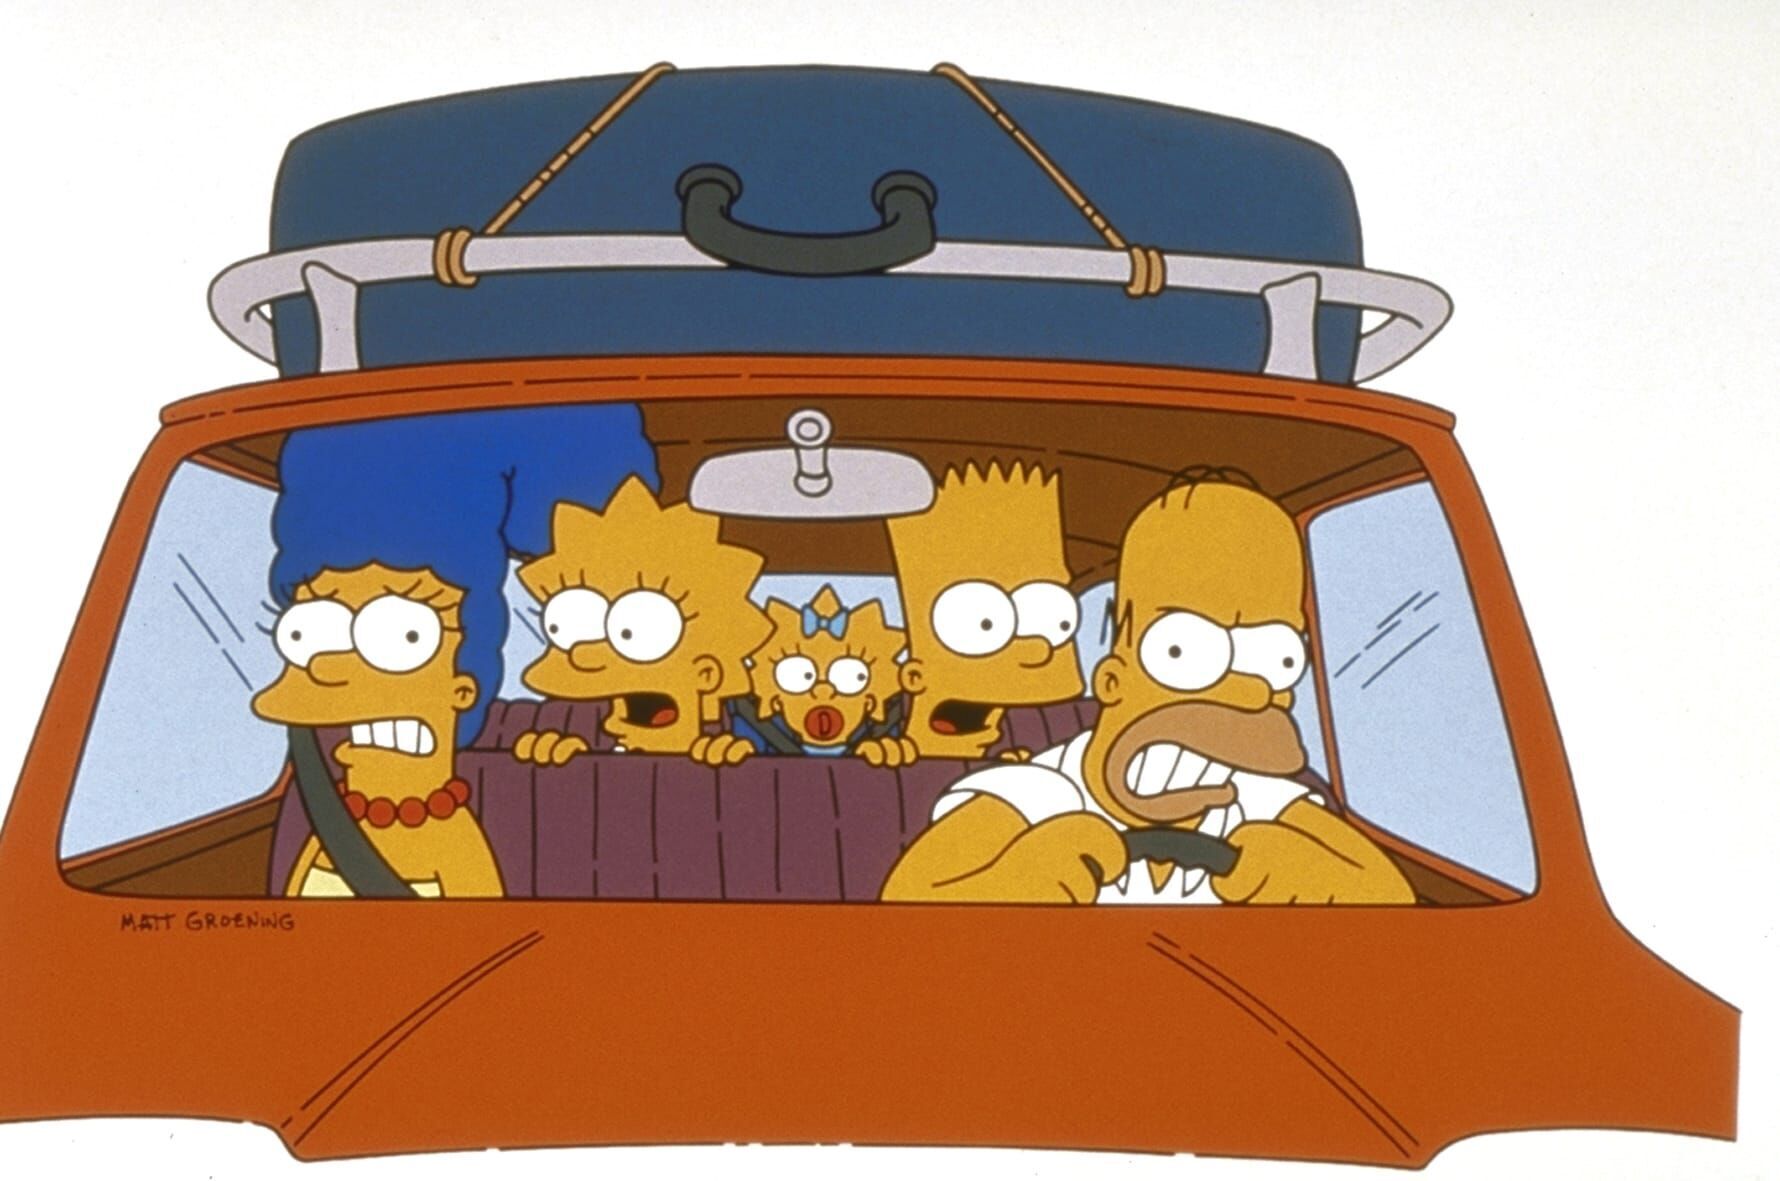 The Simpsons - Simpsoncalifragilisticexpiala(Annoyed Grunt)cious